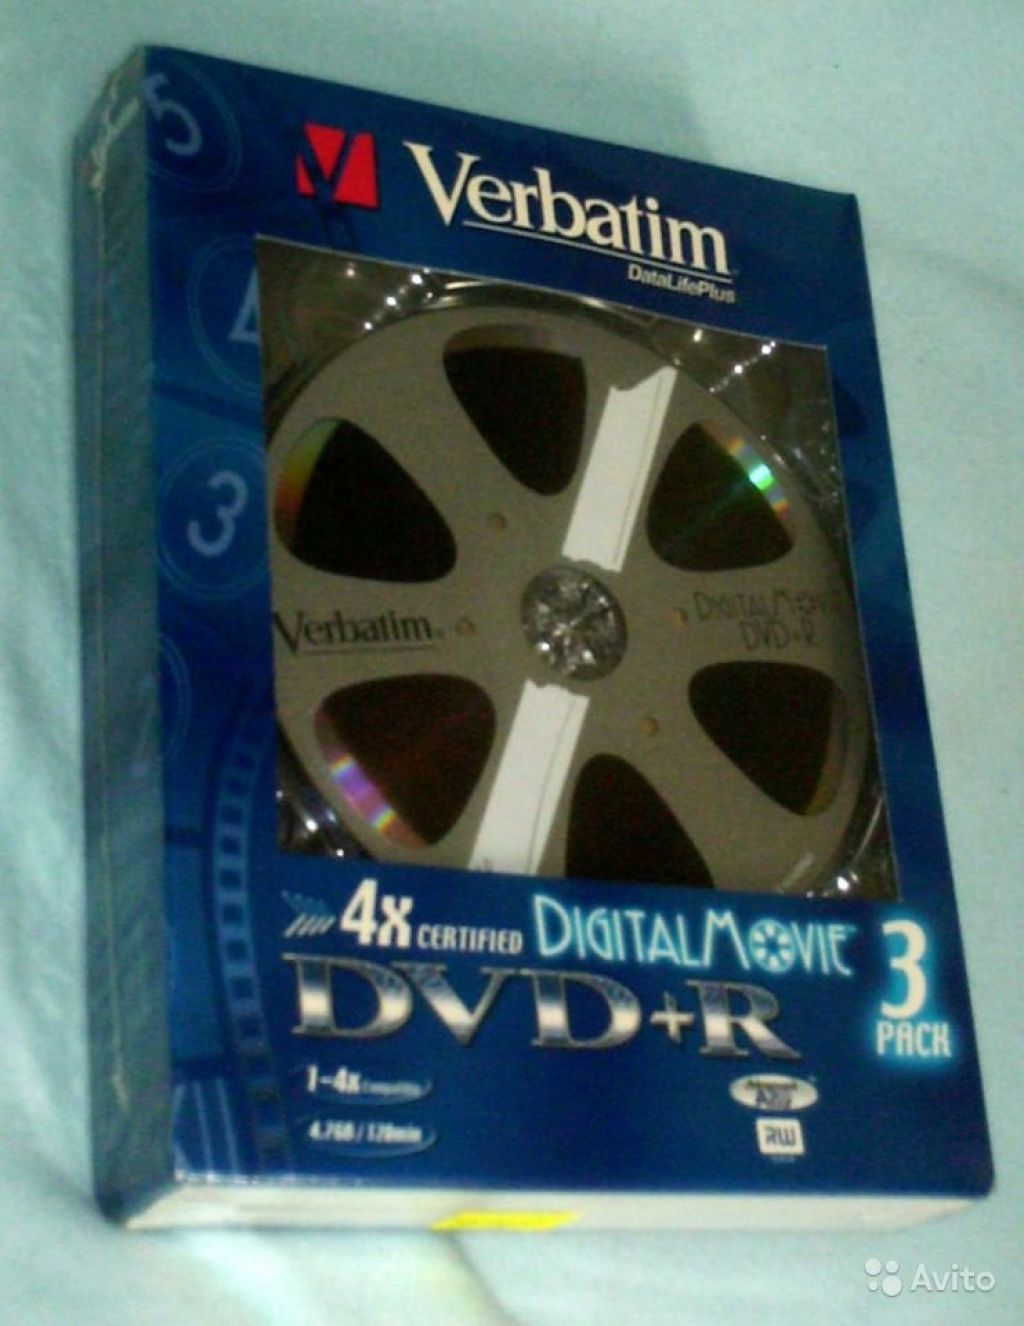 Чистые диски DVD+ R Verbatim DigitalMovie 3 pack в Москве. Фото 1